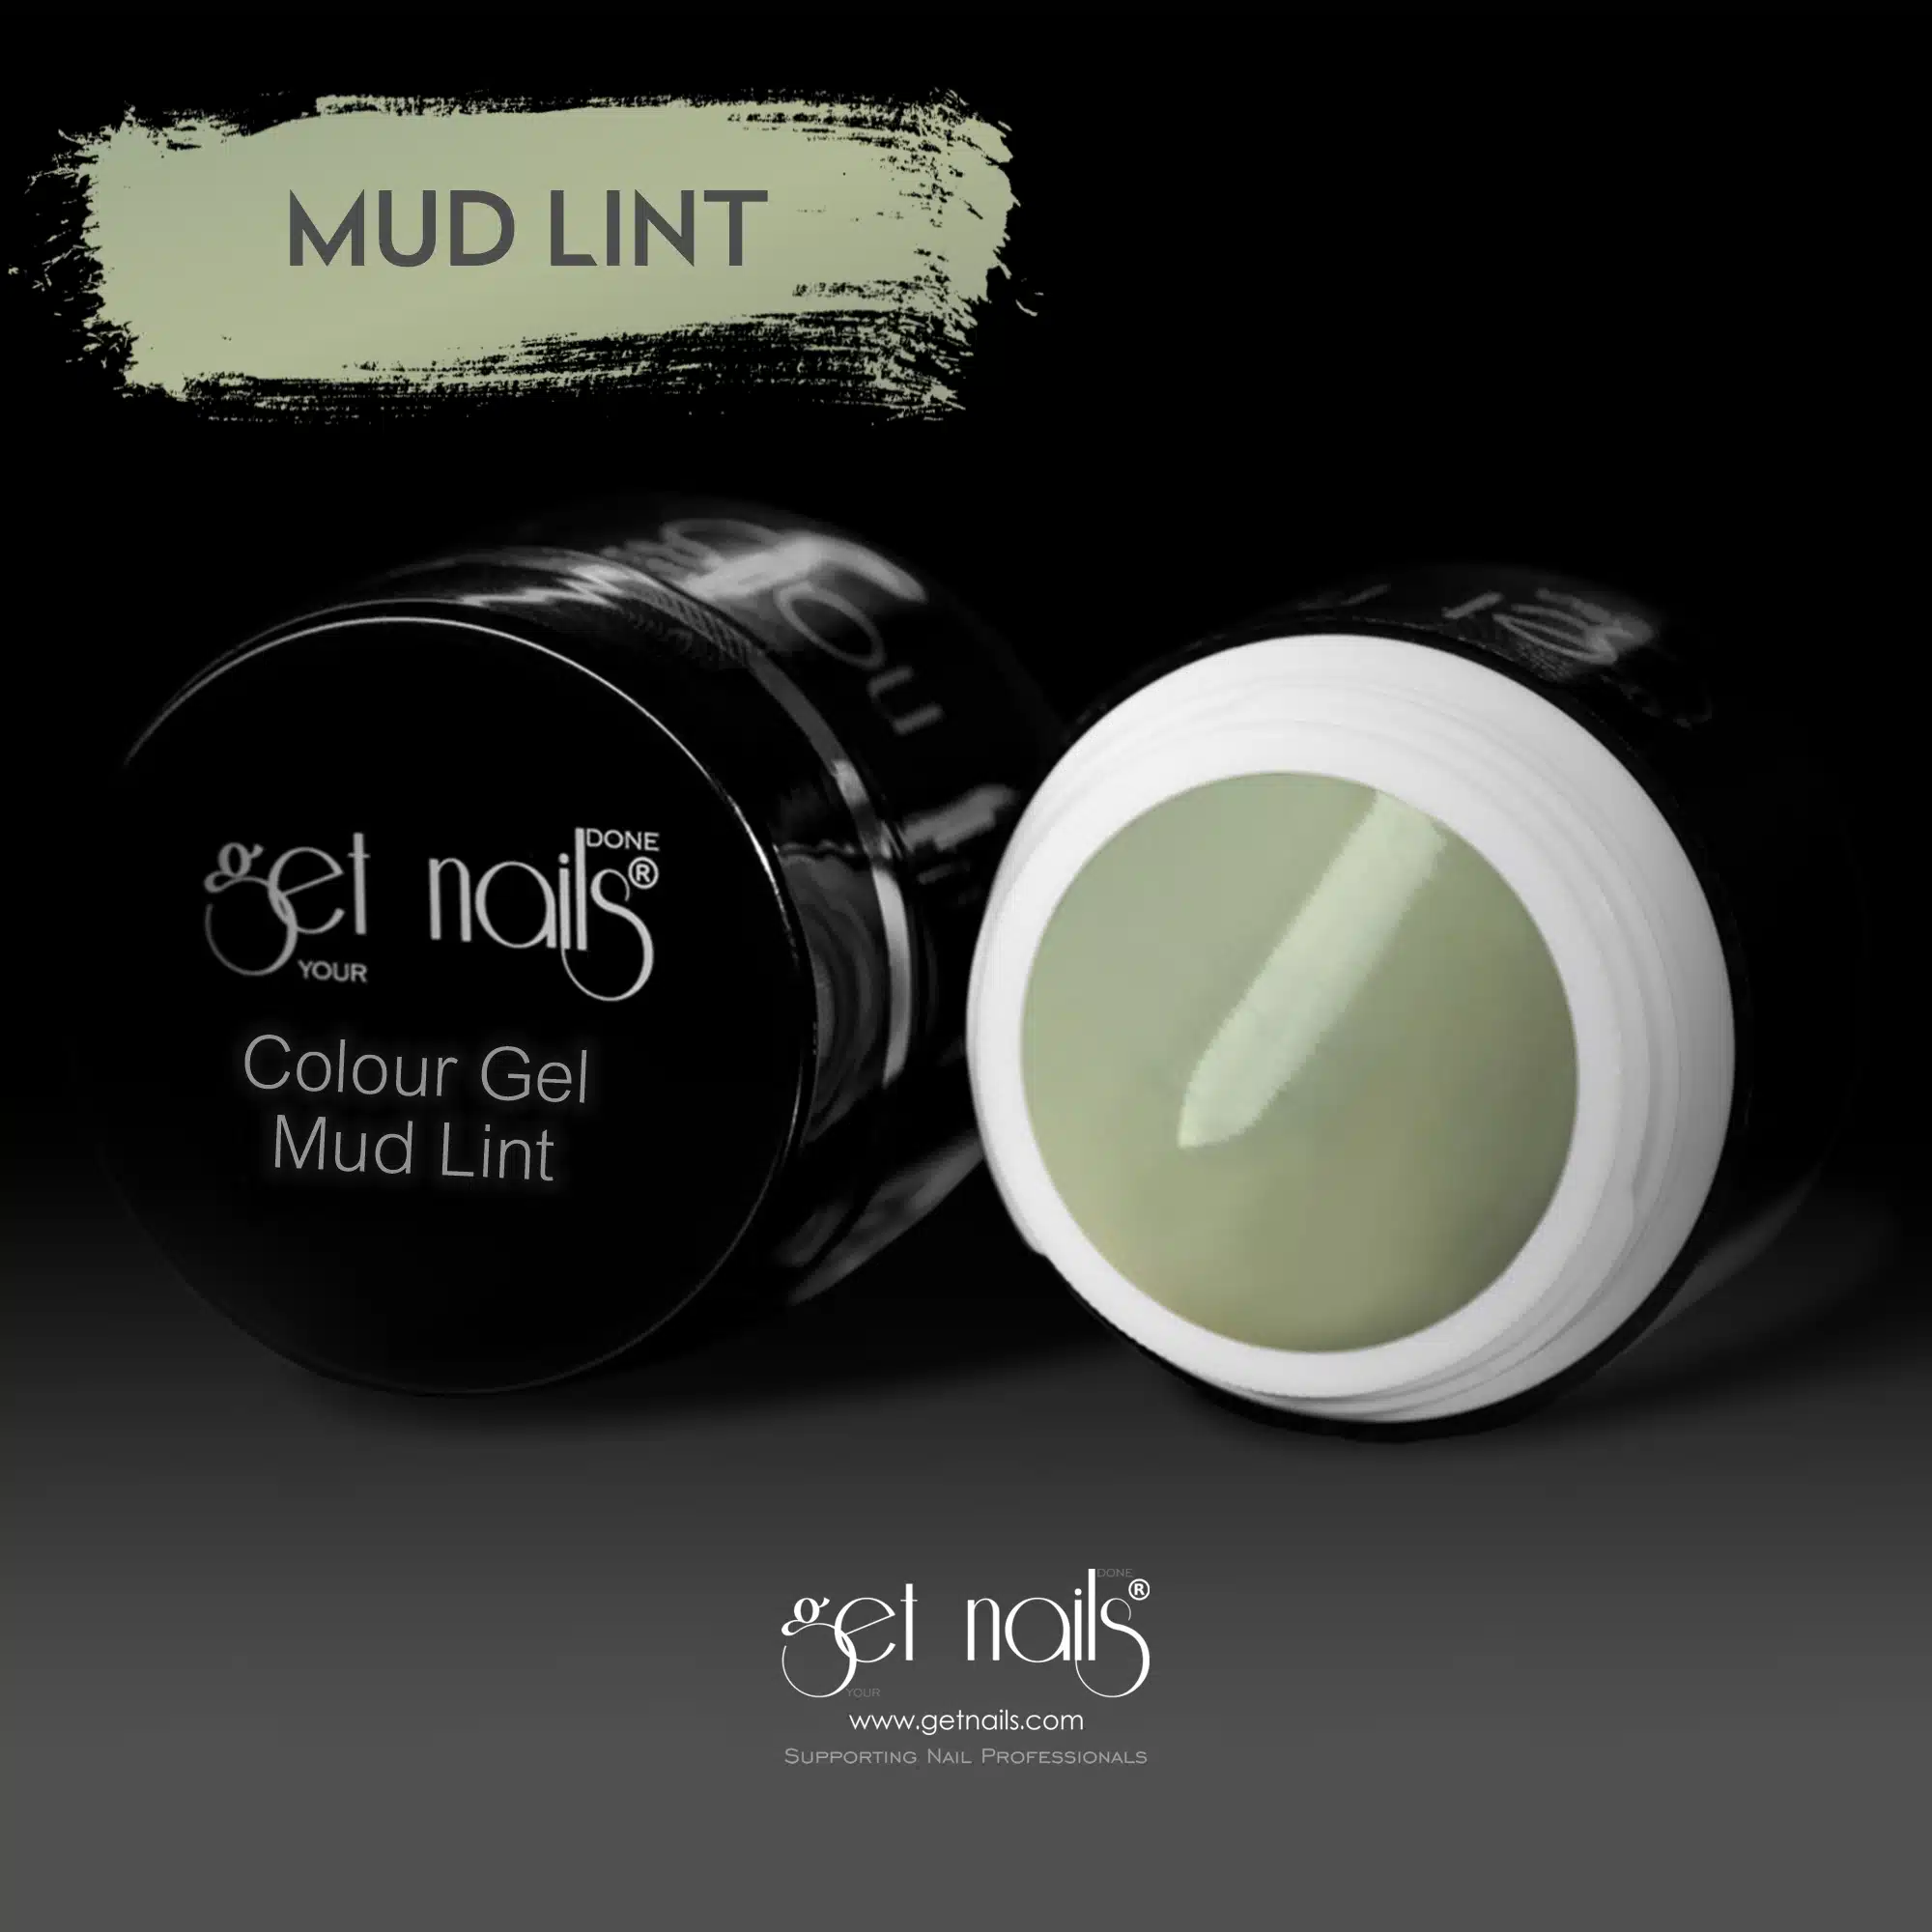 Get Nails Austria - Gel colorato Mud Lint 5g